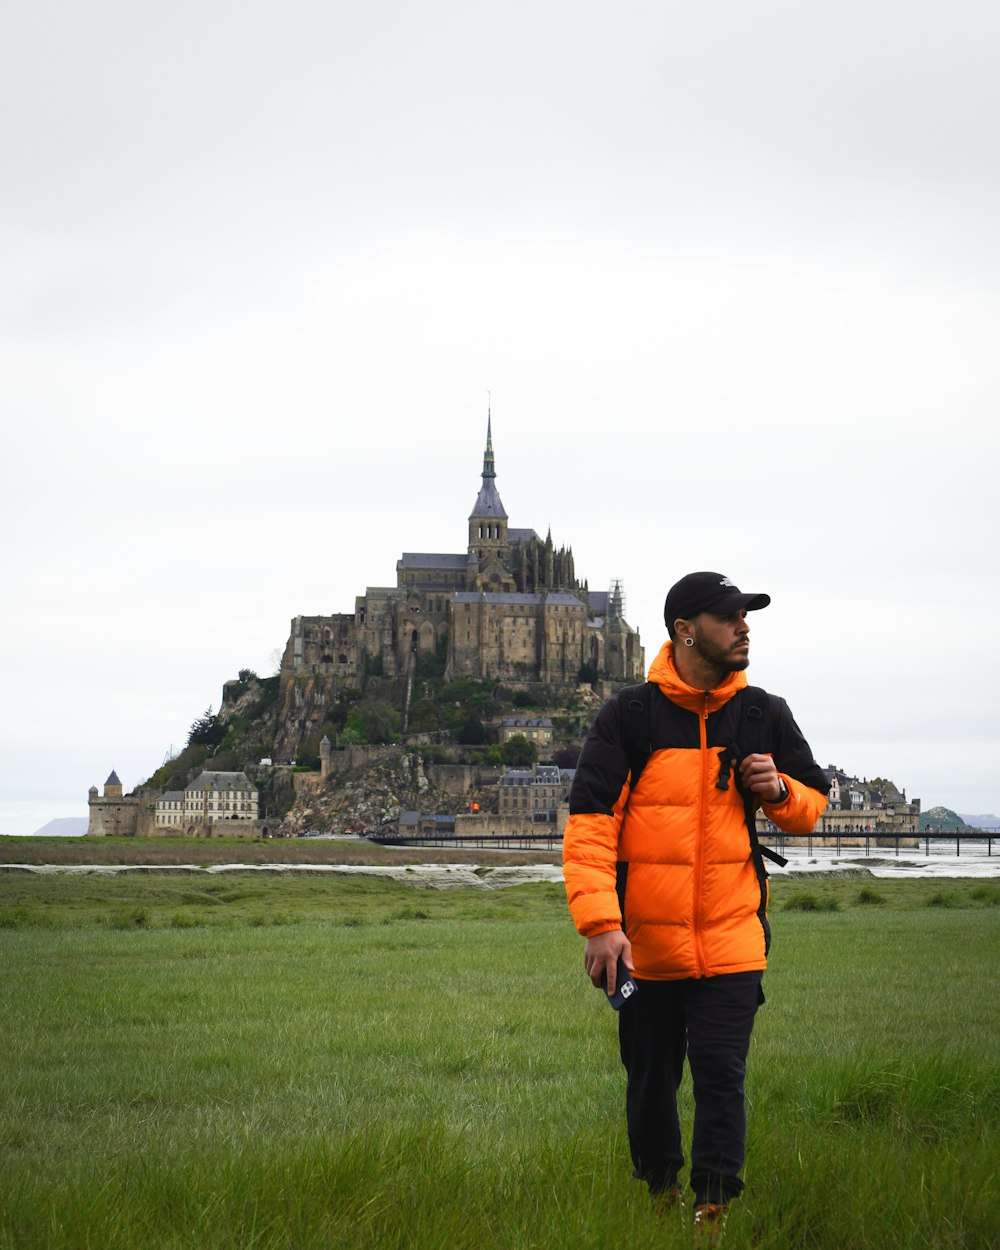 a man in an orange jacket standing in a field in front of a castle